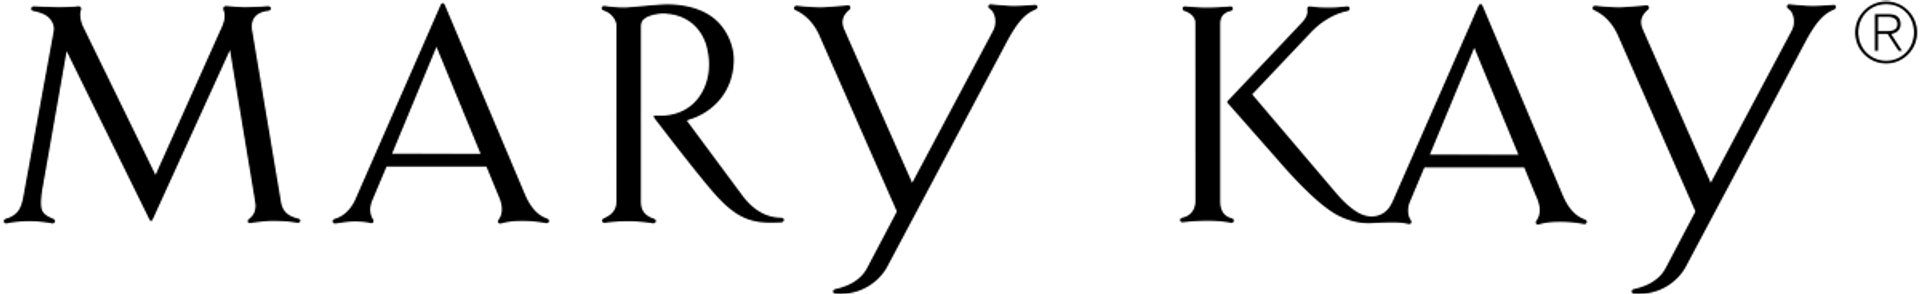 MARY KAY logo. Aktuell Prospekt